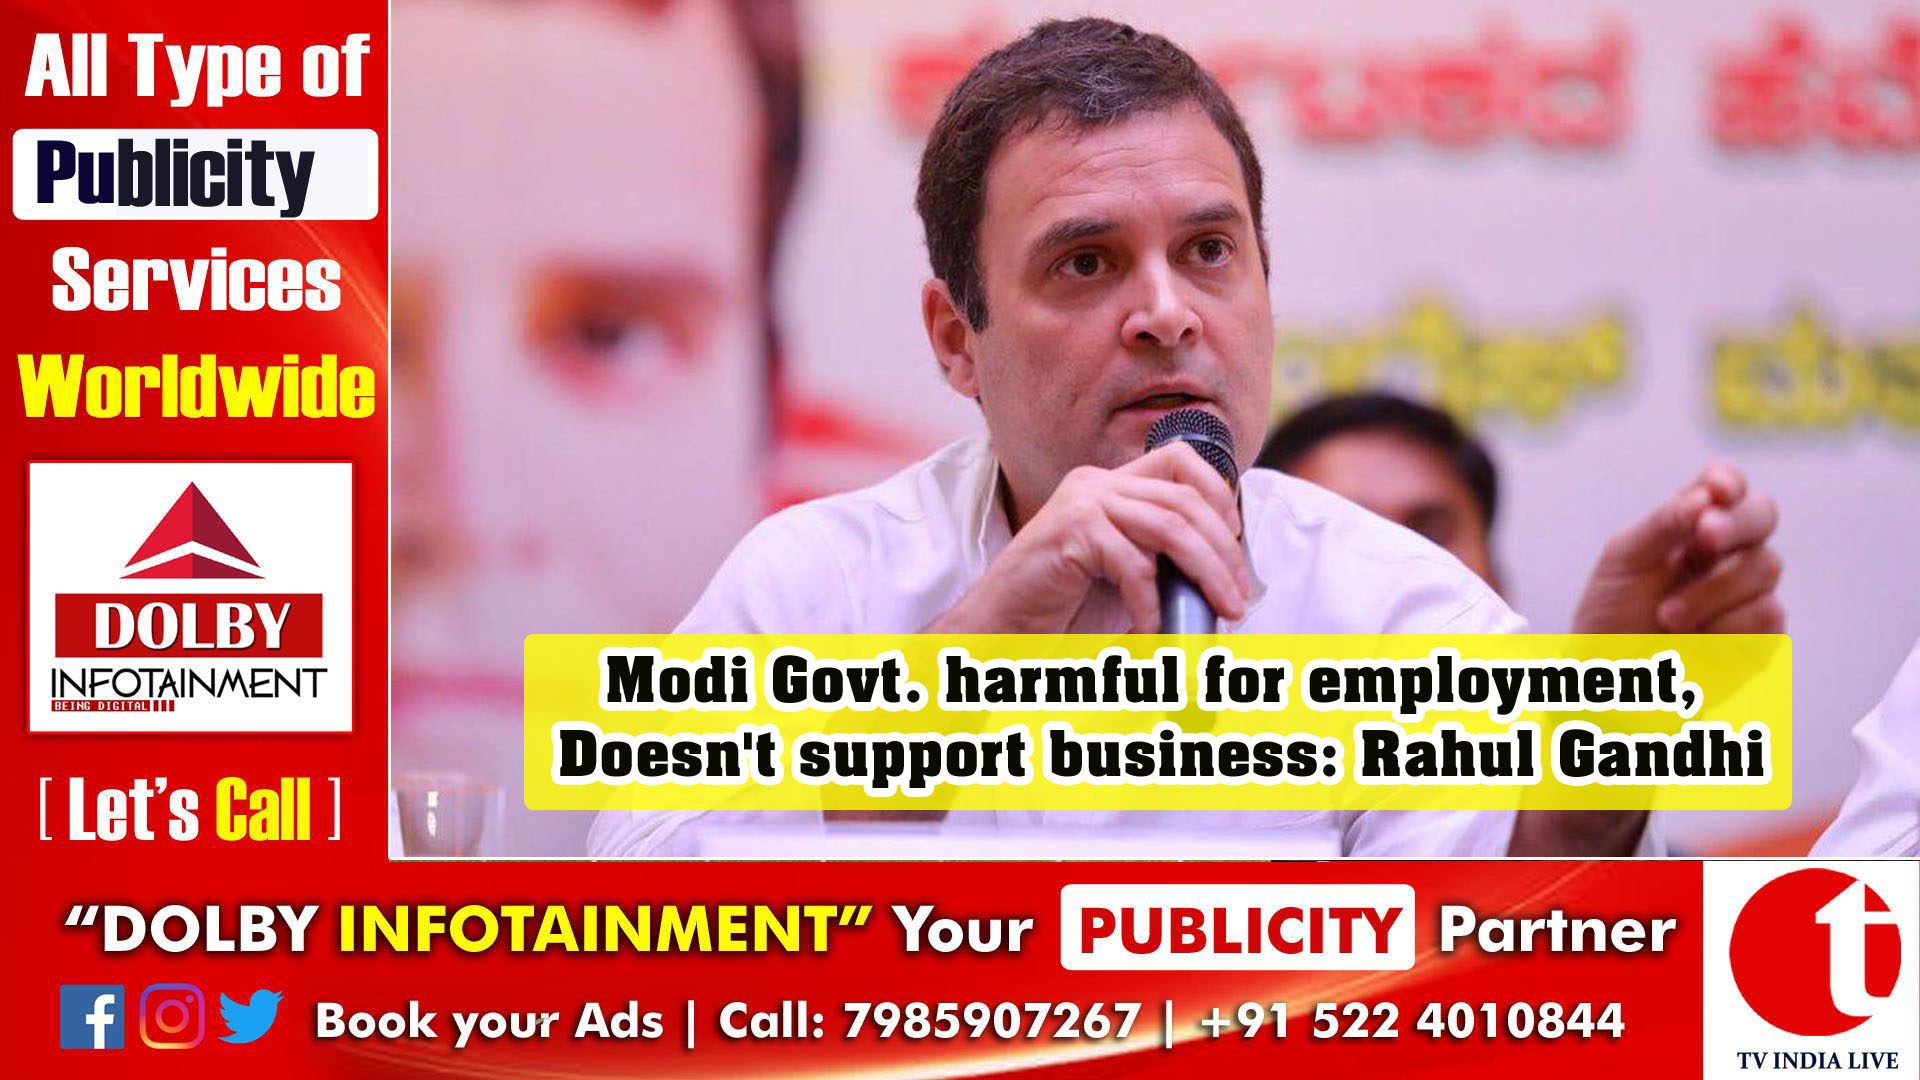 Modi Govt. harmful for employment, Doesn't support business: Rahul Gandhi